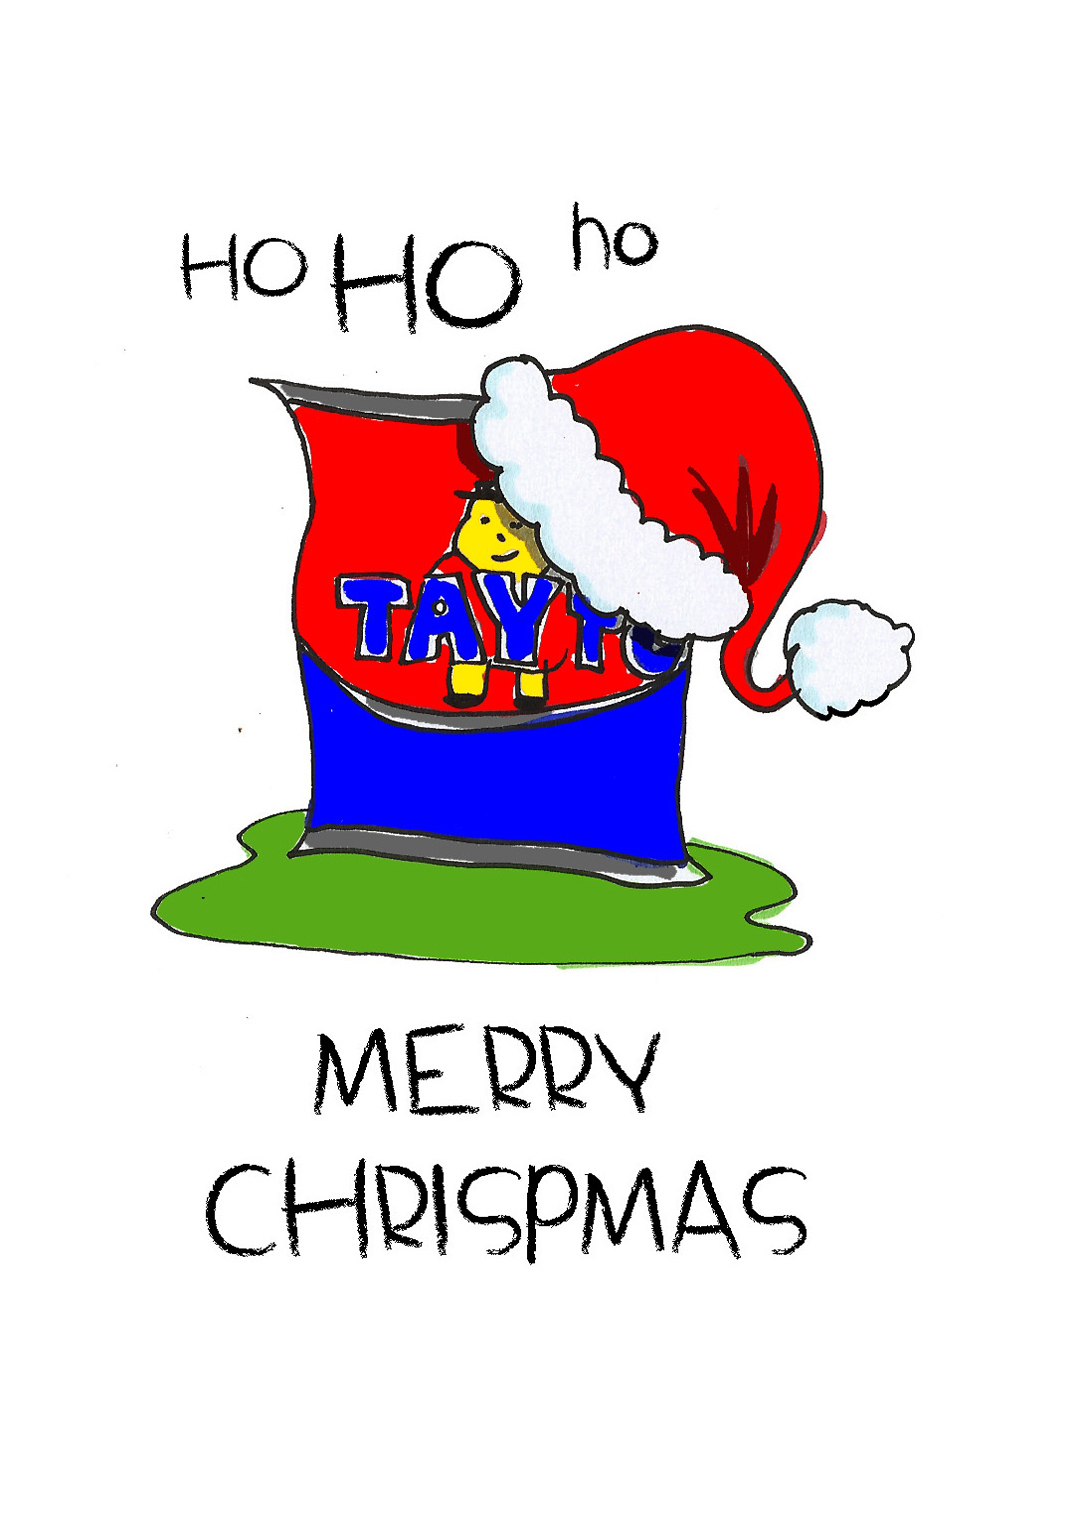 Ho Ho Ho Merry Christmas Card